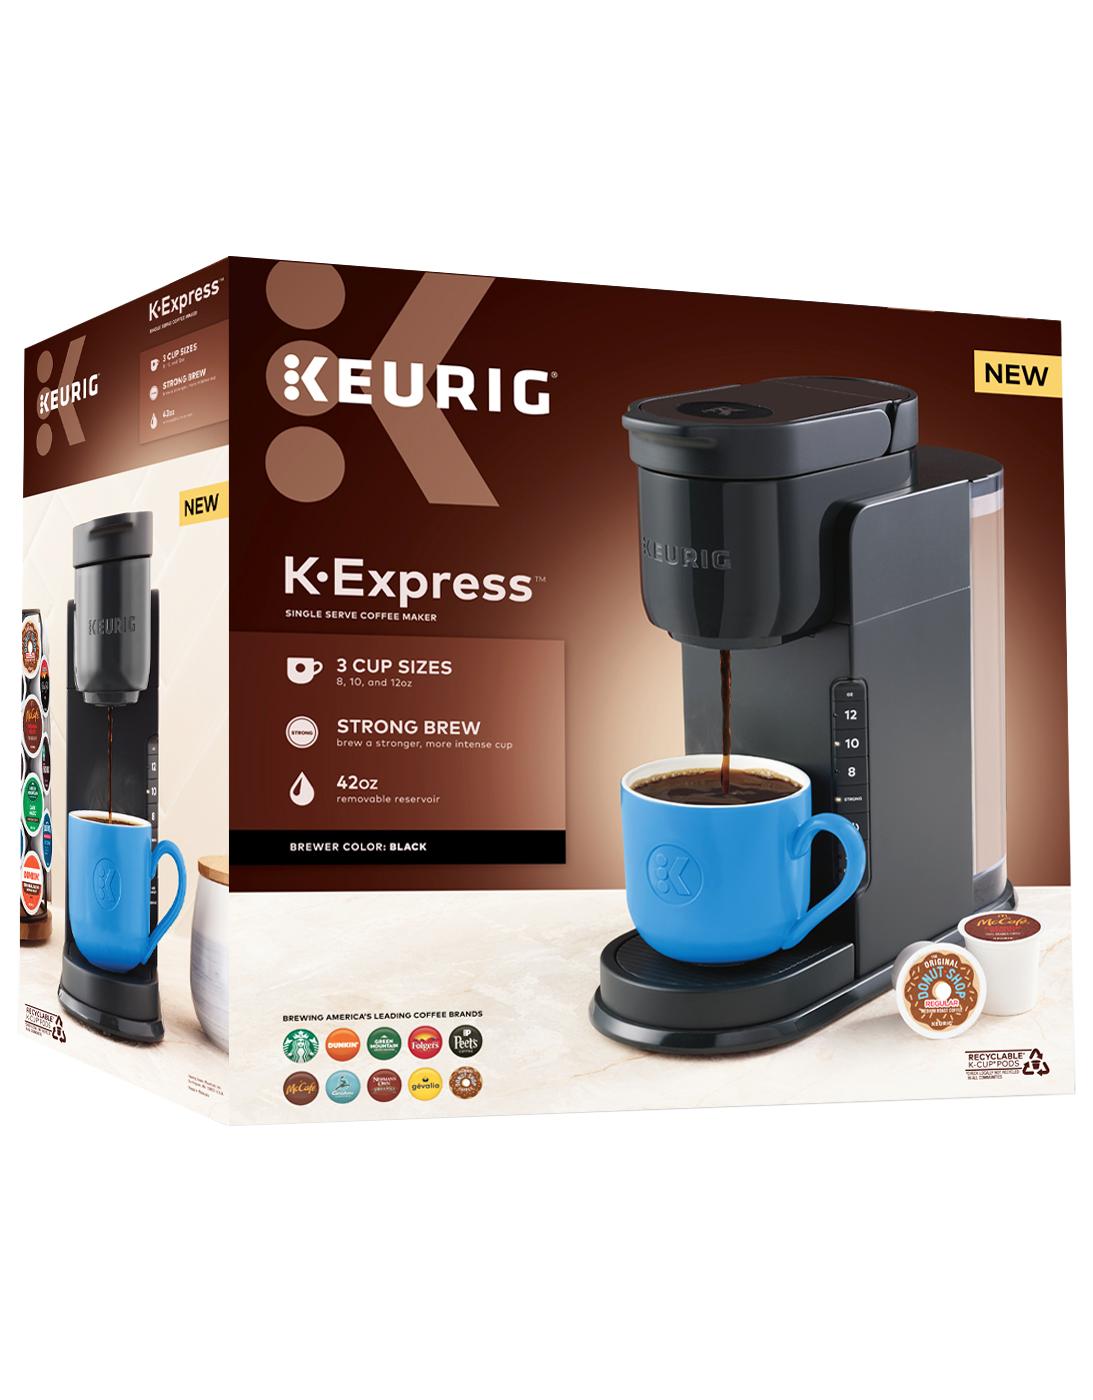 Keurig K-Express Single Serve Coffee Maker; image 1 of 4